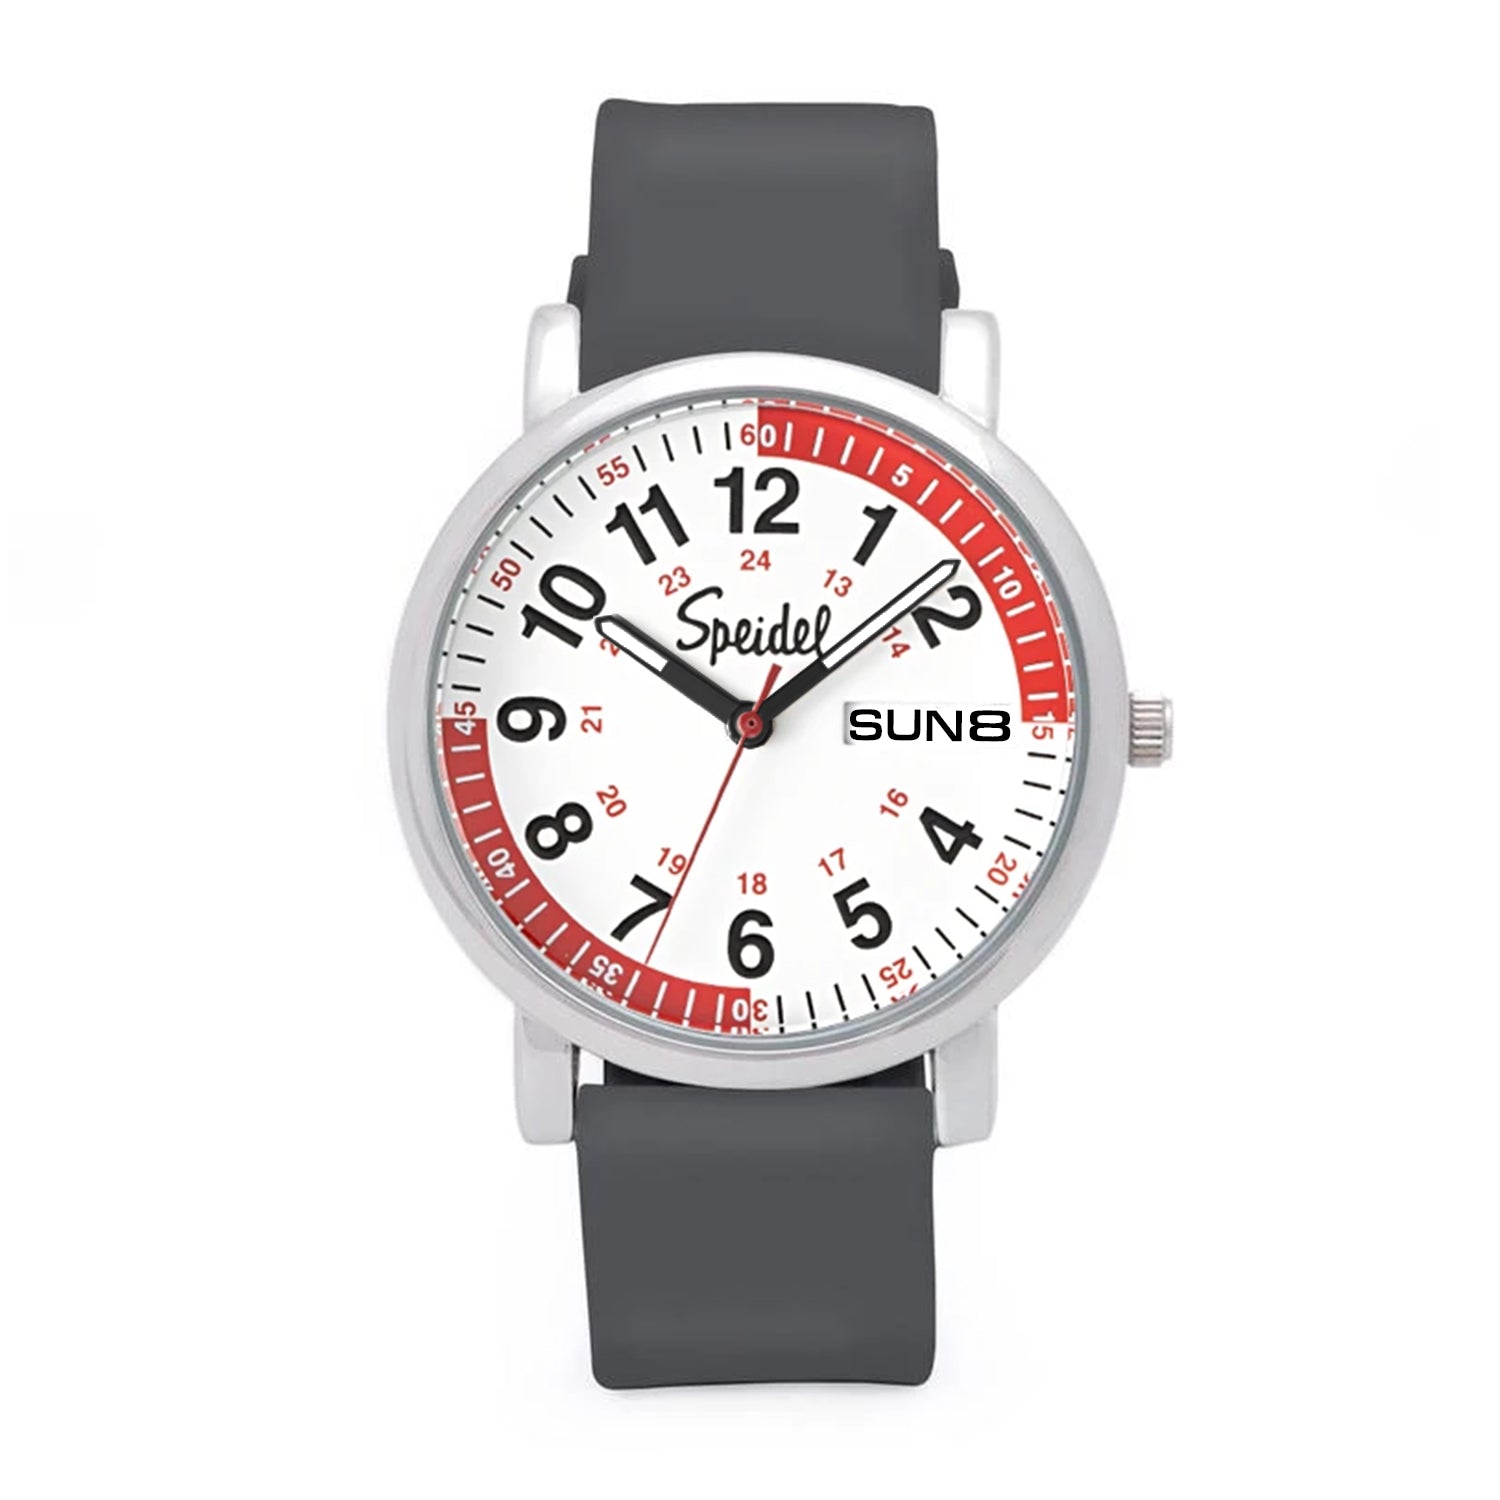 Scrub 30 Pulsometer Watch, Multi Color Medical Watch For Nurses | Speidel